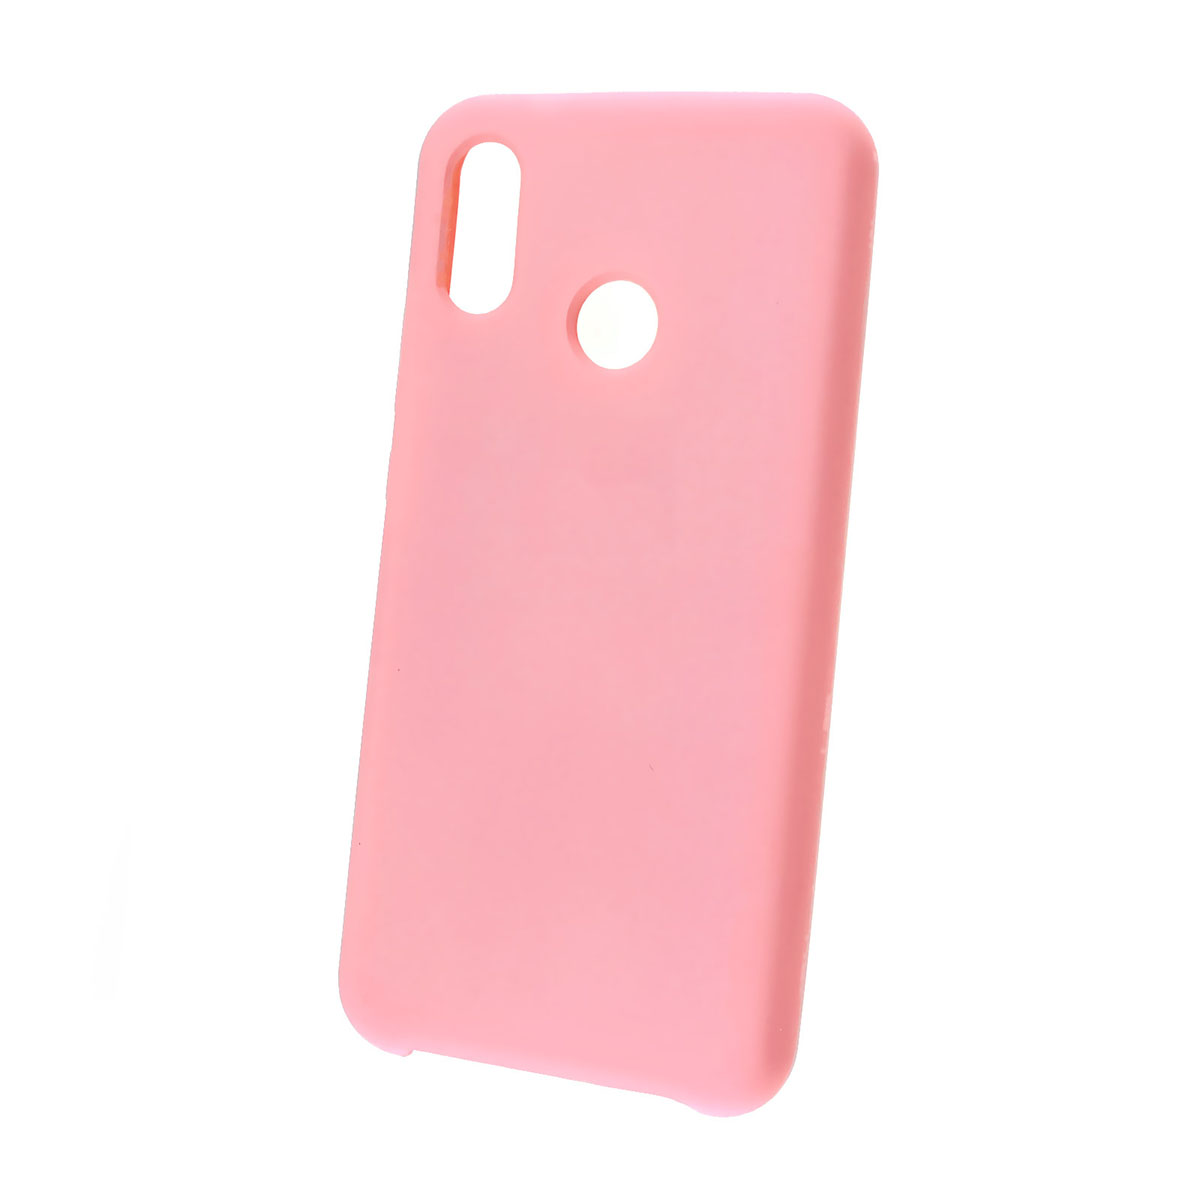 Чехол накладка Silicon Cover для HUAWEI P20 Lite, силикон, бархат, цвет розовый